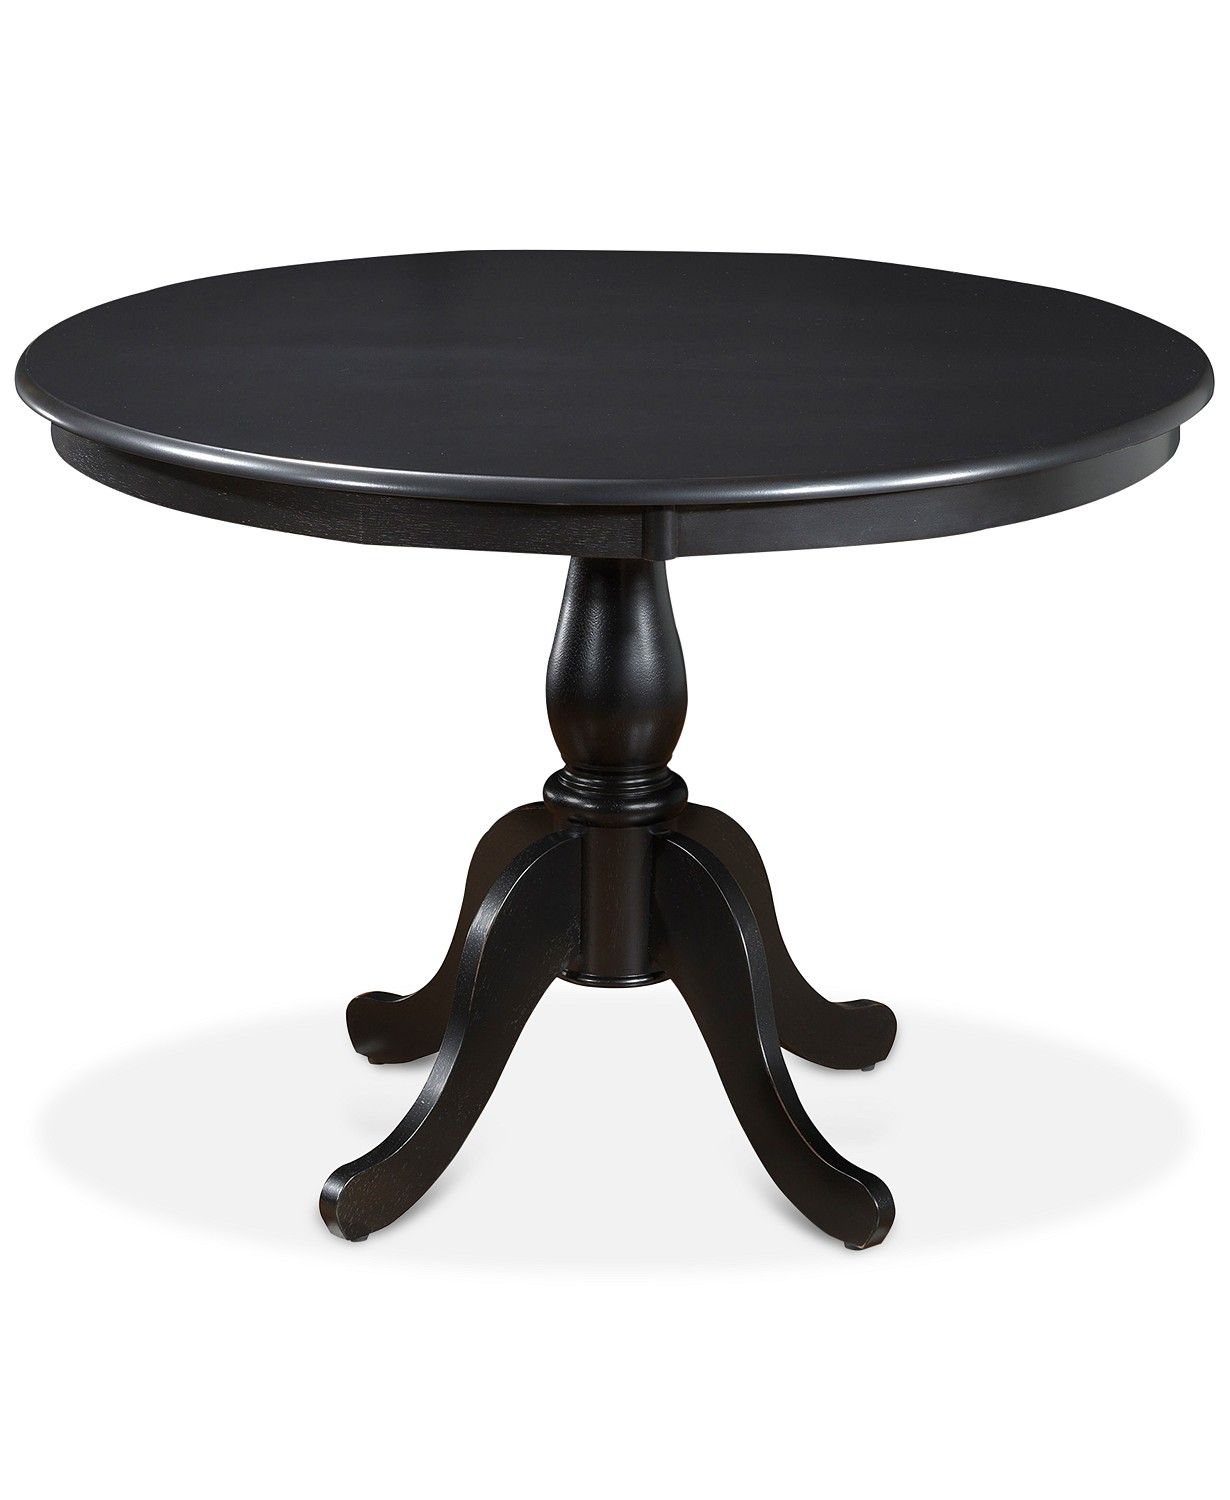 Furniture Farmingdale Round Dining Table & Reviews - Furniture - Macy's | Macys (US)